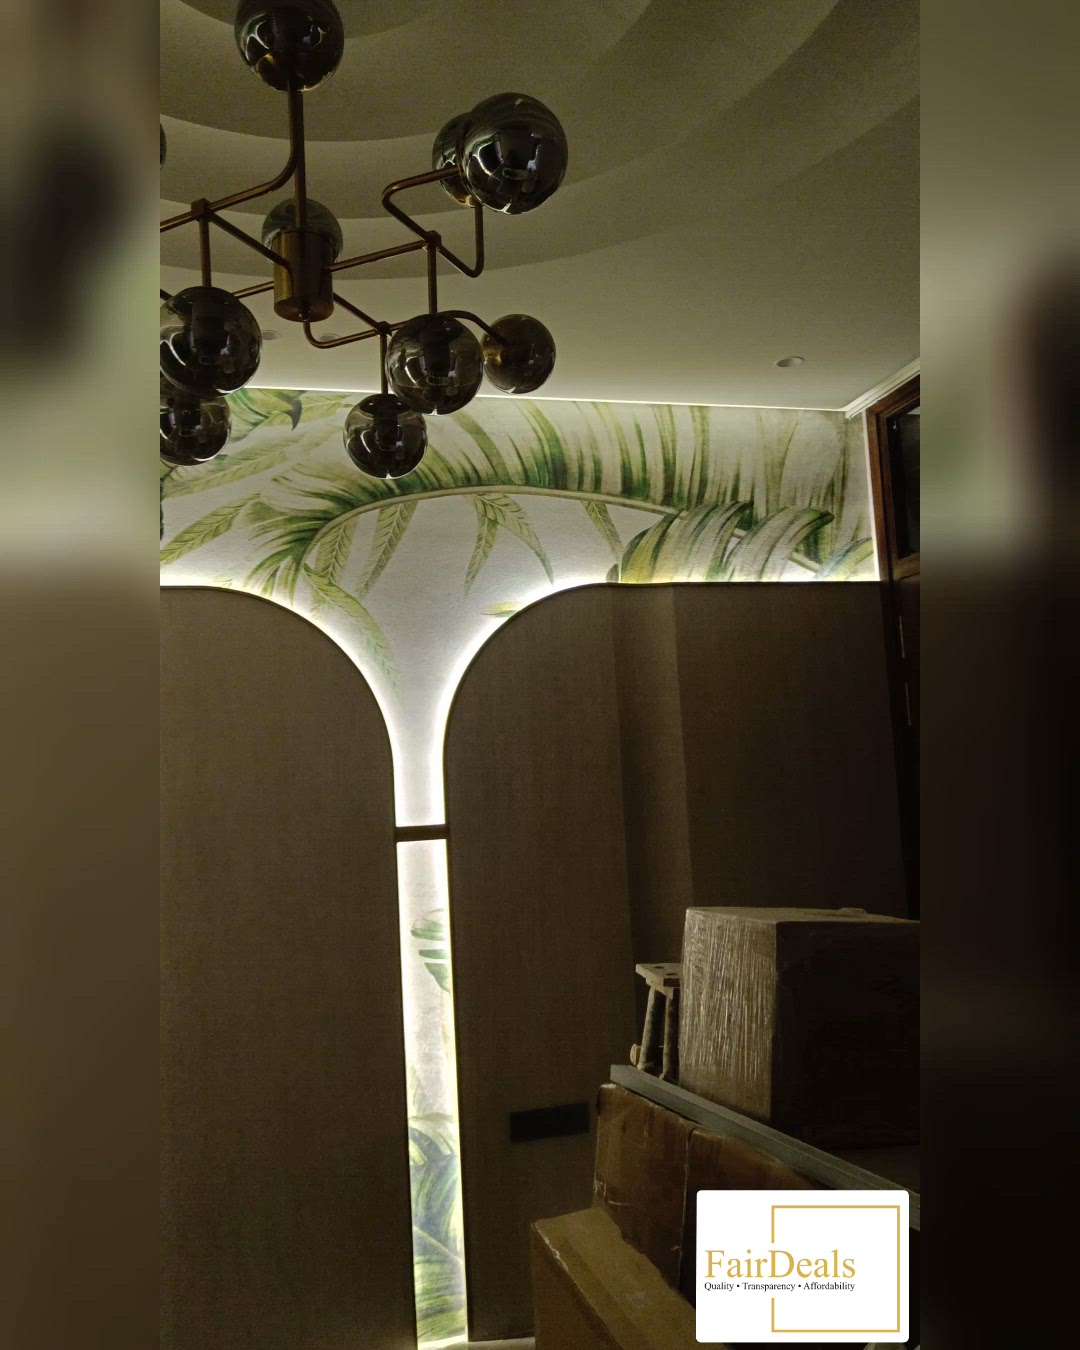 Customised Wallpaper Installed By FairDeals 😍😍

Contact For Wallpaper, PVC False Ceiling, Wooden Flooring, PVC Flooring, SPC Flooring, PVC Wall Panel, WPC Louvers, Charcoal Louvers, Artificial Grass, Vertical Garden, Blinds Etc. 
📱 - 8107940665
        7878443883
#fairdeals #fairdealsjaipur #jaipur #WallDecors #LivingRoomWallPaper #customized_wallpaper #LivingroomDesigns #WallDesigns #HomeAutomation #ElevationHome #HomeDecor #homedecoration #InteriorDesigner #LivingRoomInspiration #Architectural&Interior #Architect #architecturedesigns #HouseDesigns #CivilEngineer #engineers #Contractor #interiorcontractors #PVCFalseCeiling #Pvc #Pvcpanel #business #Sales #sale #marketing #viralkolo #koloapp #digital #enterpreneur #installation #jaipurtourism #jaipurdiaries #jaipurfoodblogger #jaipurcity #jaipuri #jaipurcityblog #rajasthan #interior_designer_in_rajasthan #rajasthani #rajasthandiaries #pinkcity #pinkcityjaipur #instahome #Installing #louver #louversplank #louvers #charcoalpanels